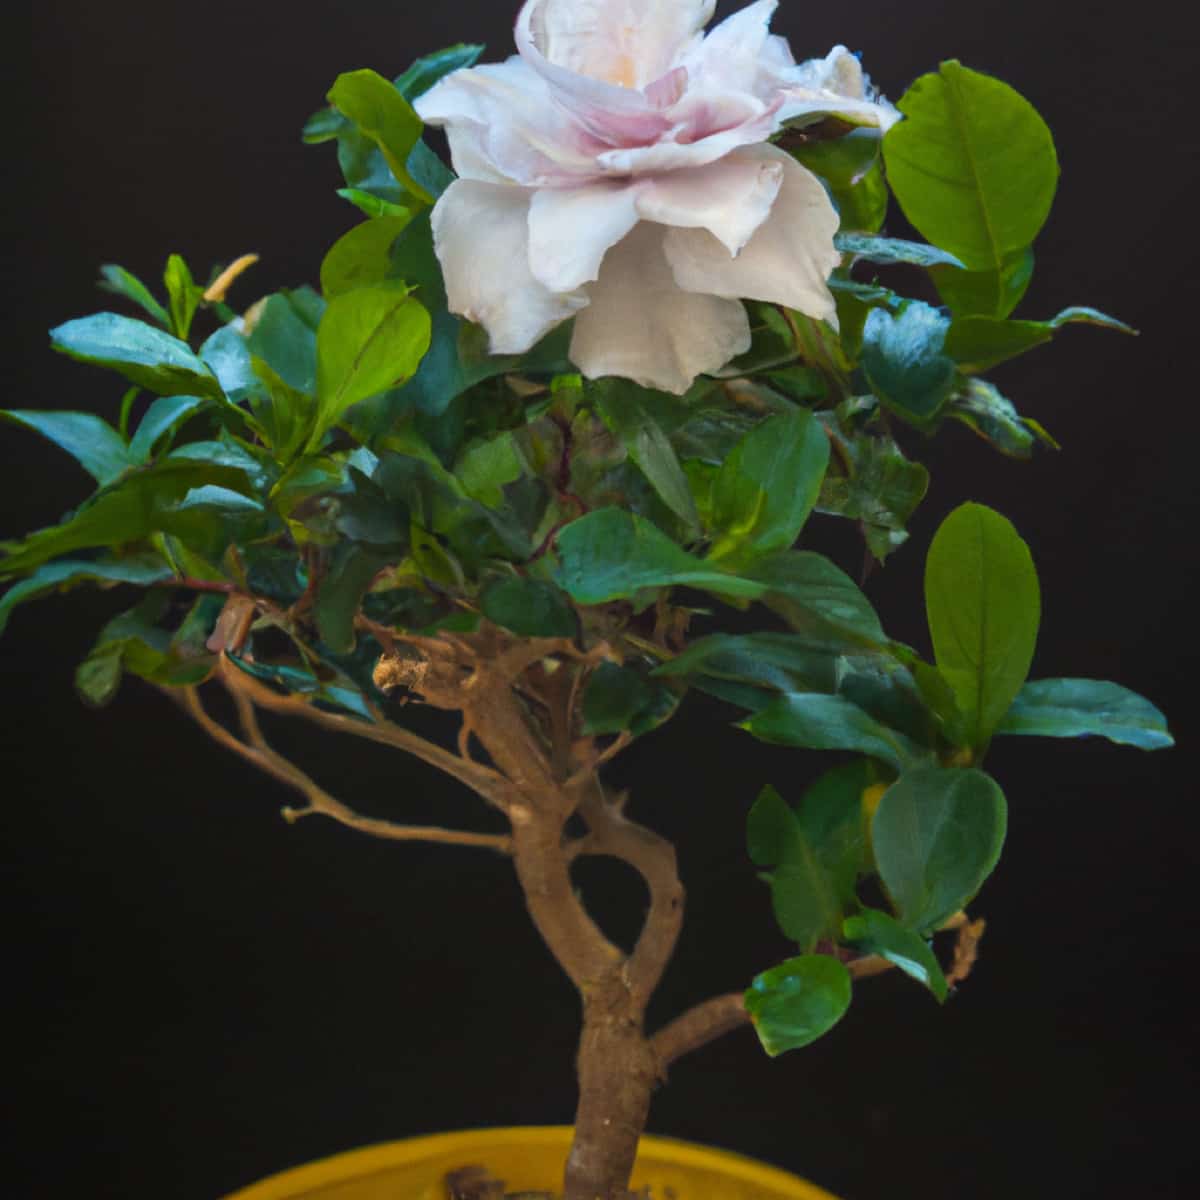 How to Grow and Care for Gardenia Bonsai